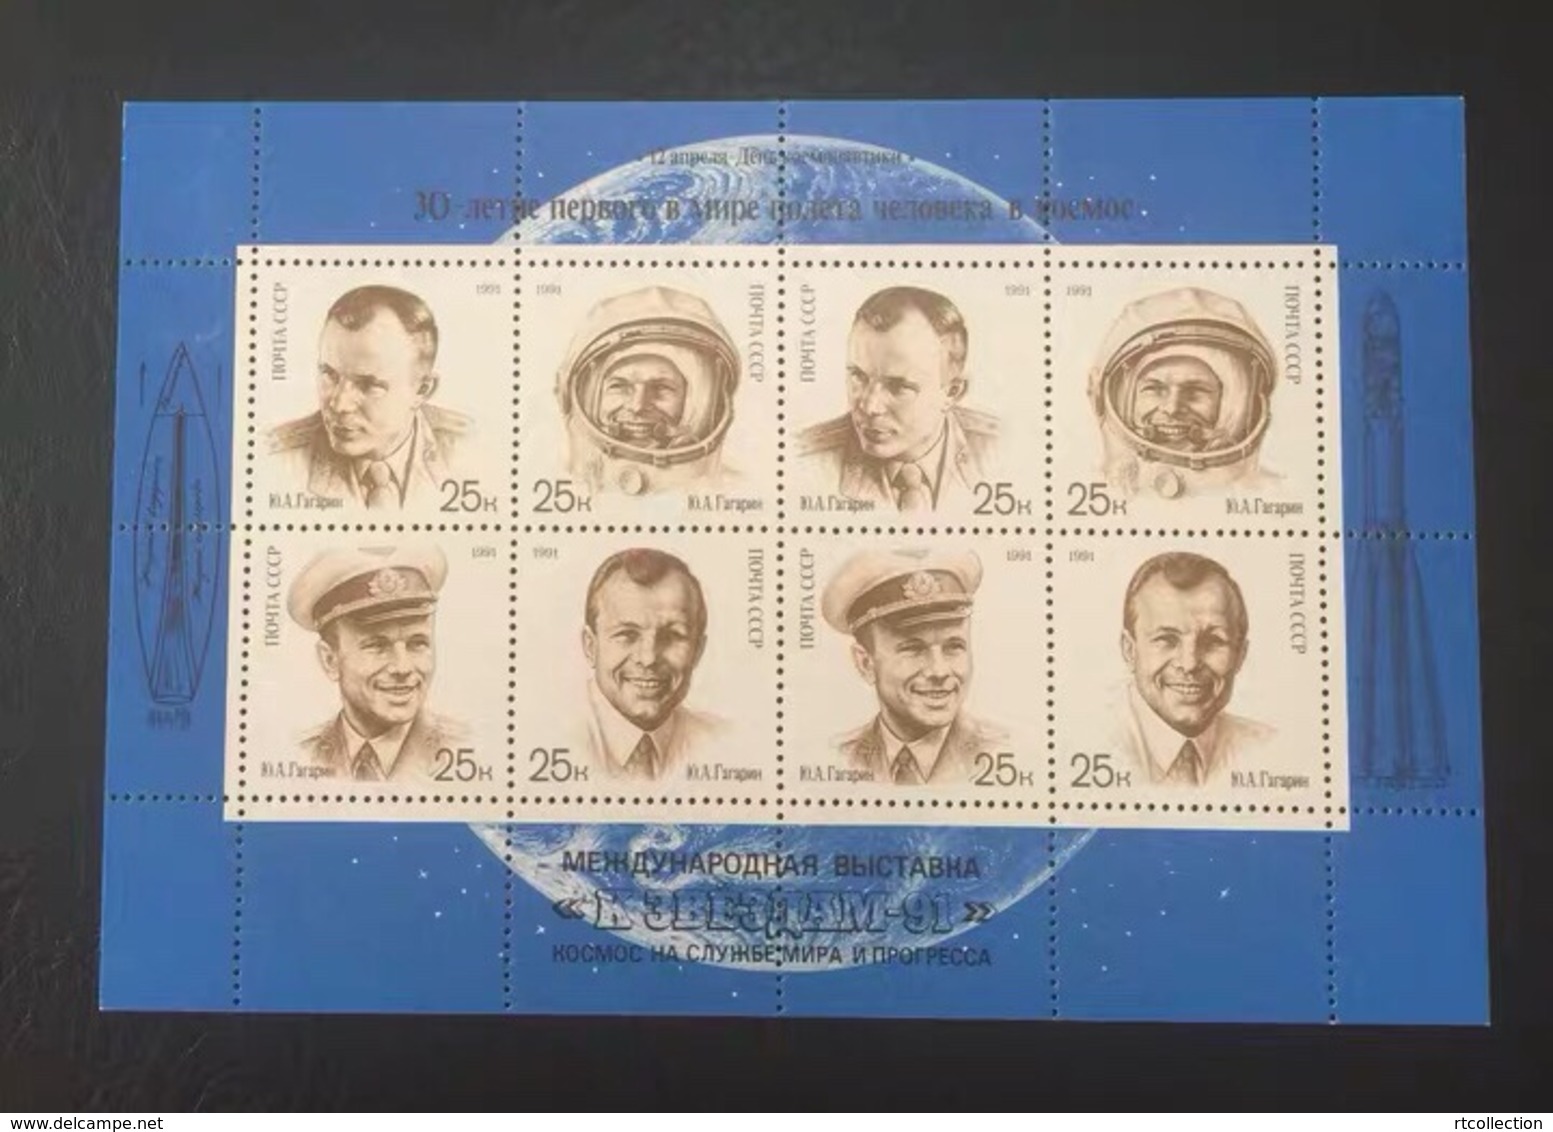 USSR Russia 1991 M/S 30th Anniv First Man In Space Cosmonautics Day Yuri Gagarin Explore Spacemen People Stamps MNH - Collezioni